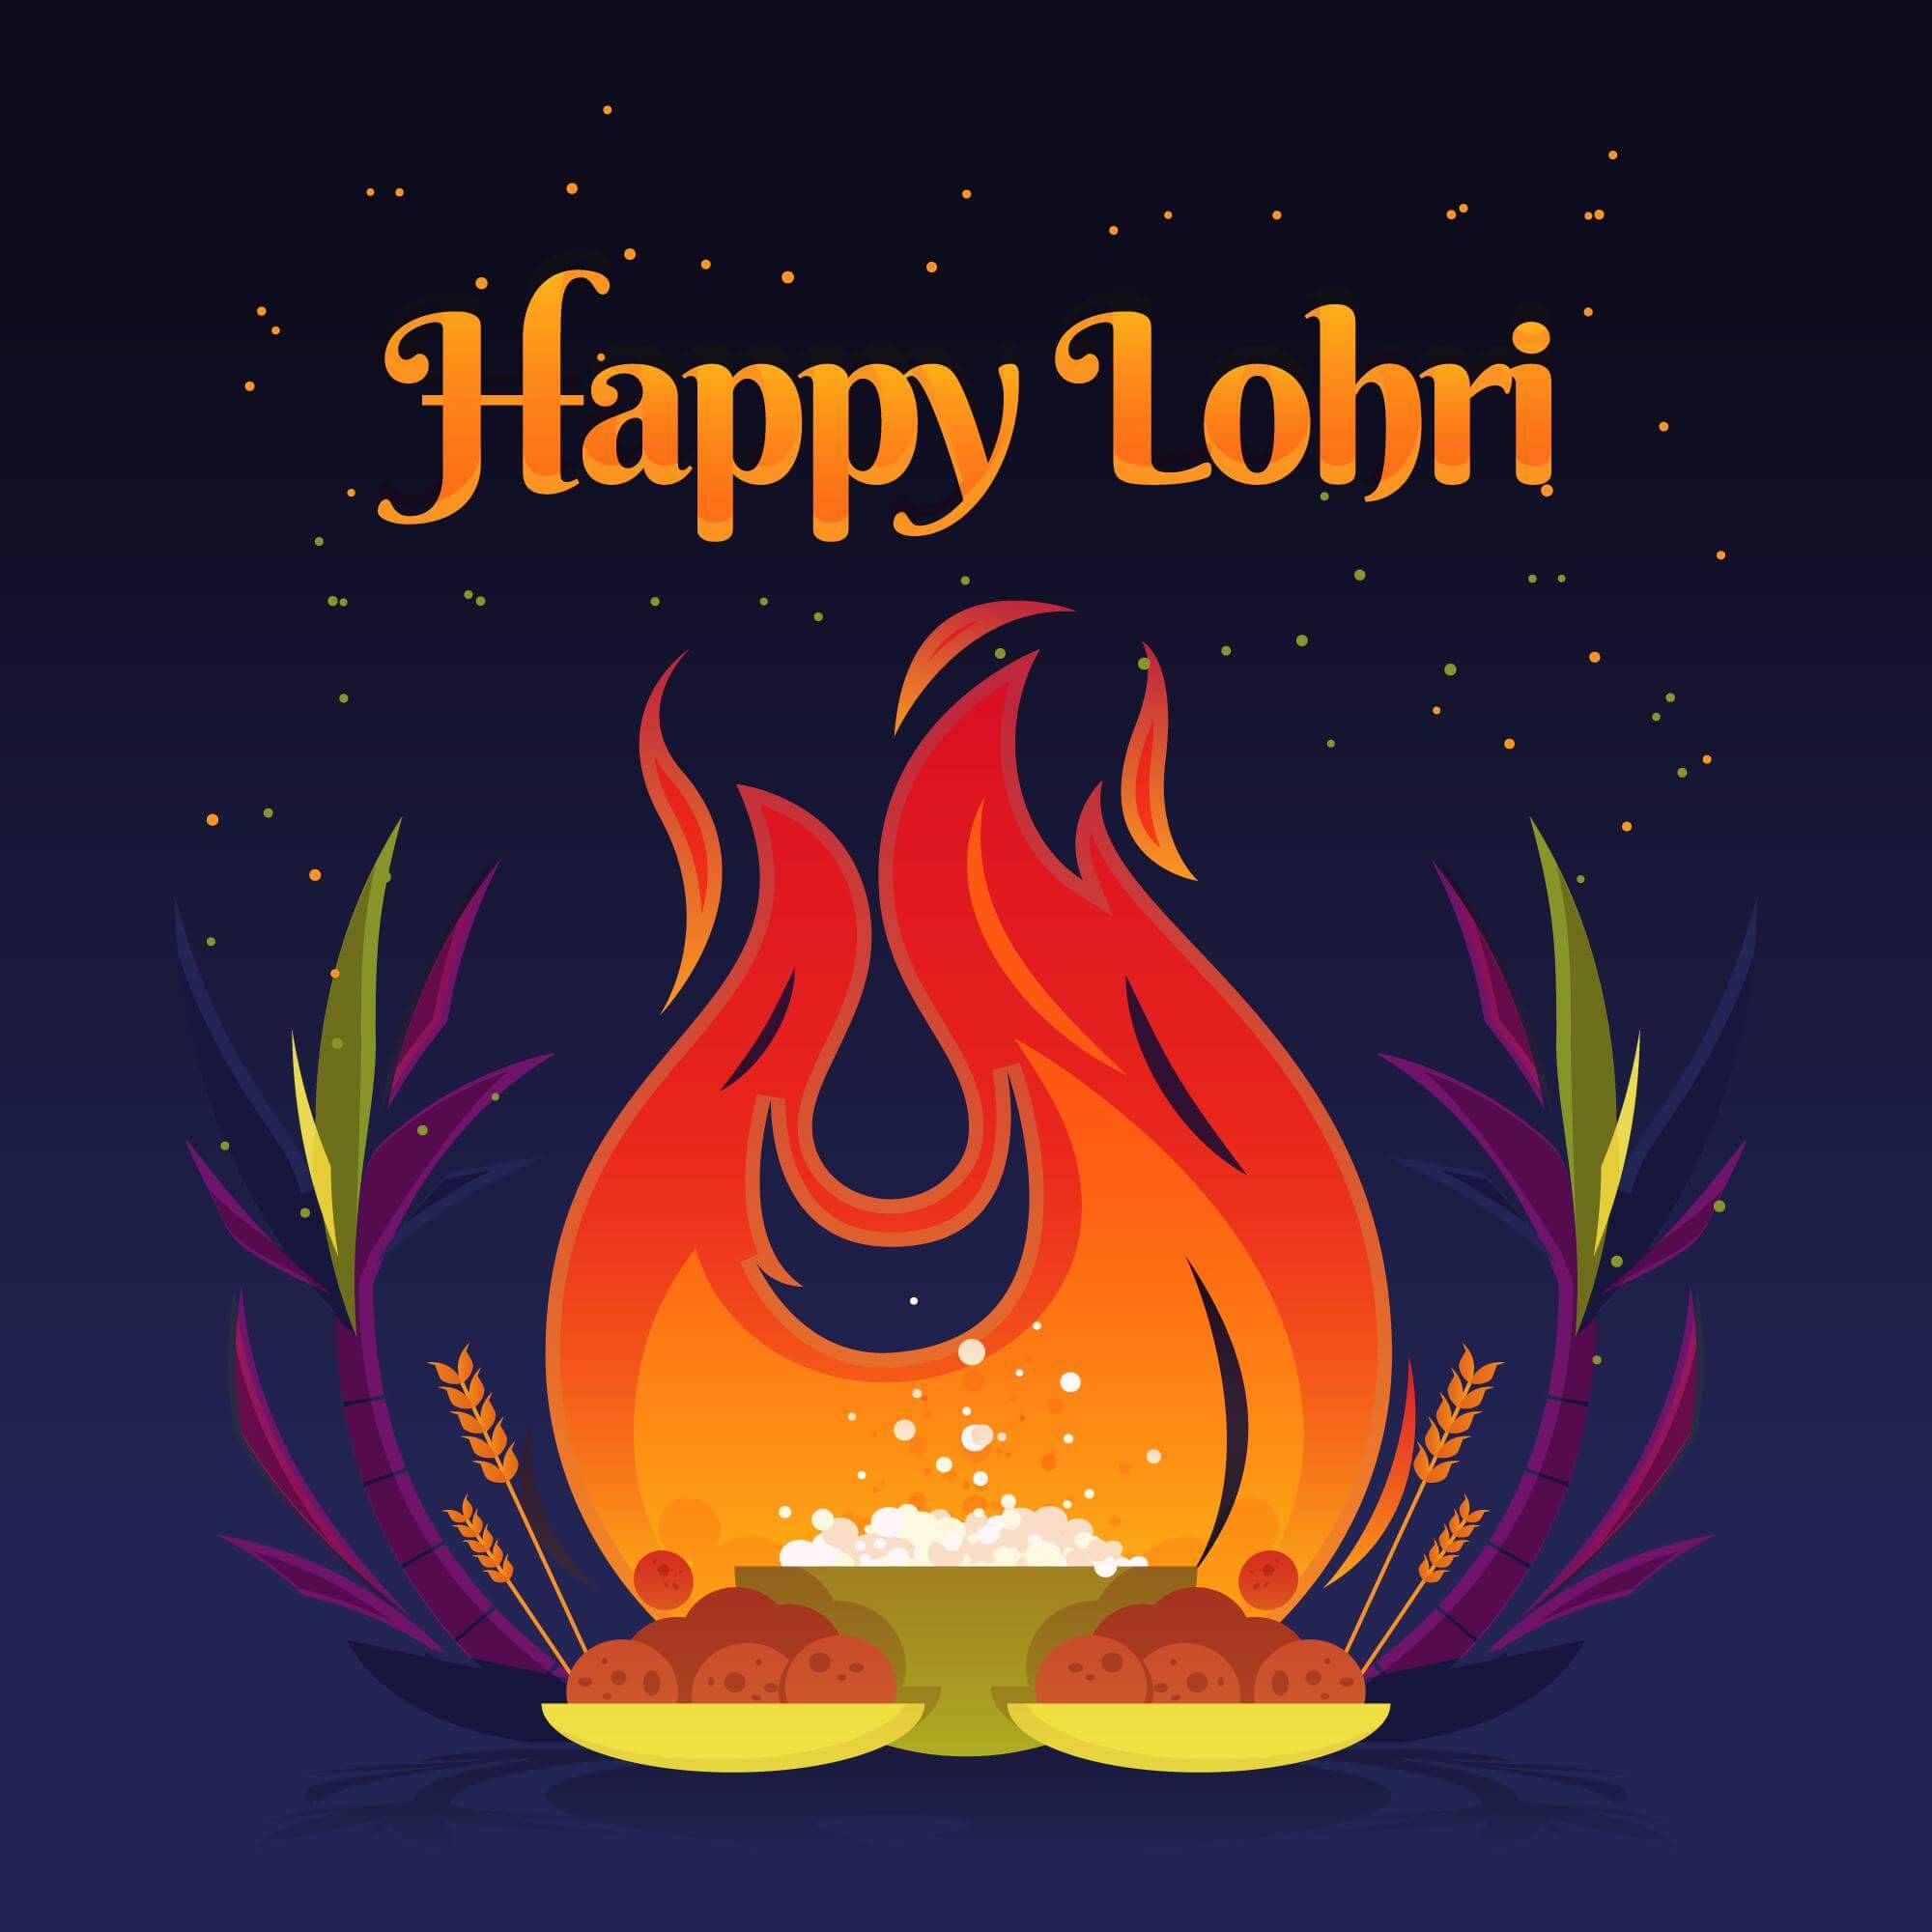 Happy Lohri 2023 Images & Photos Free Download - Image Diamond